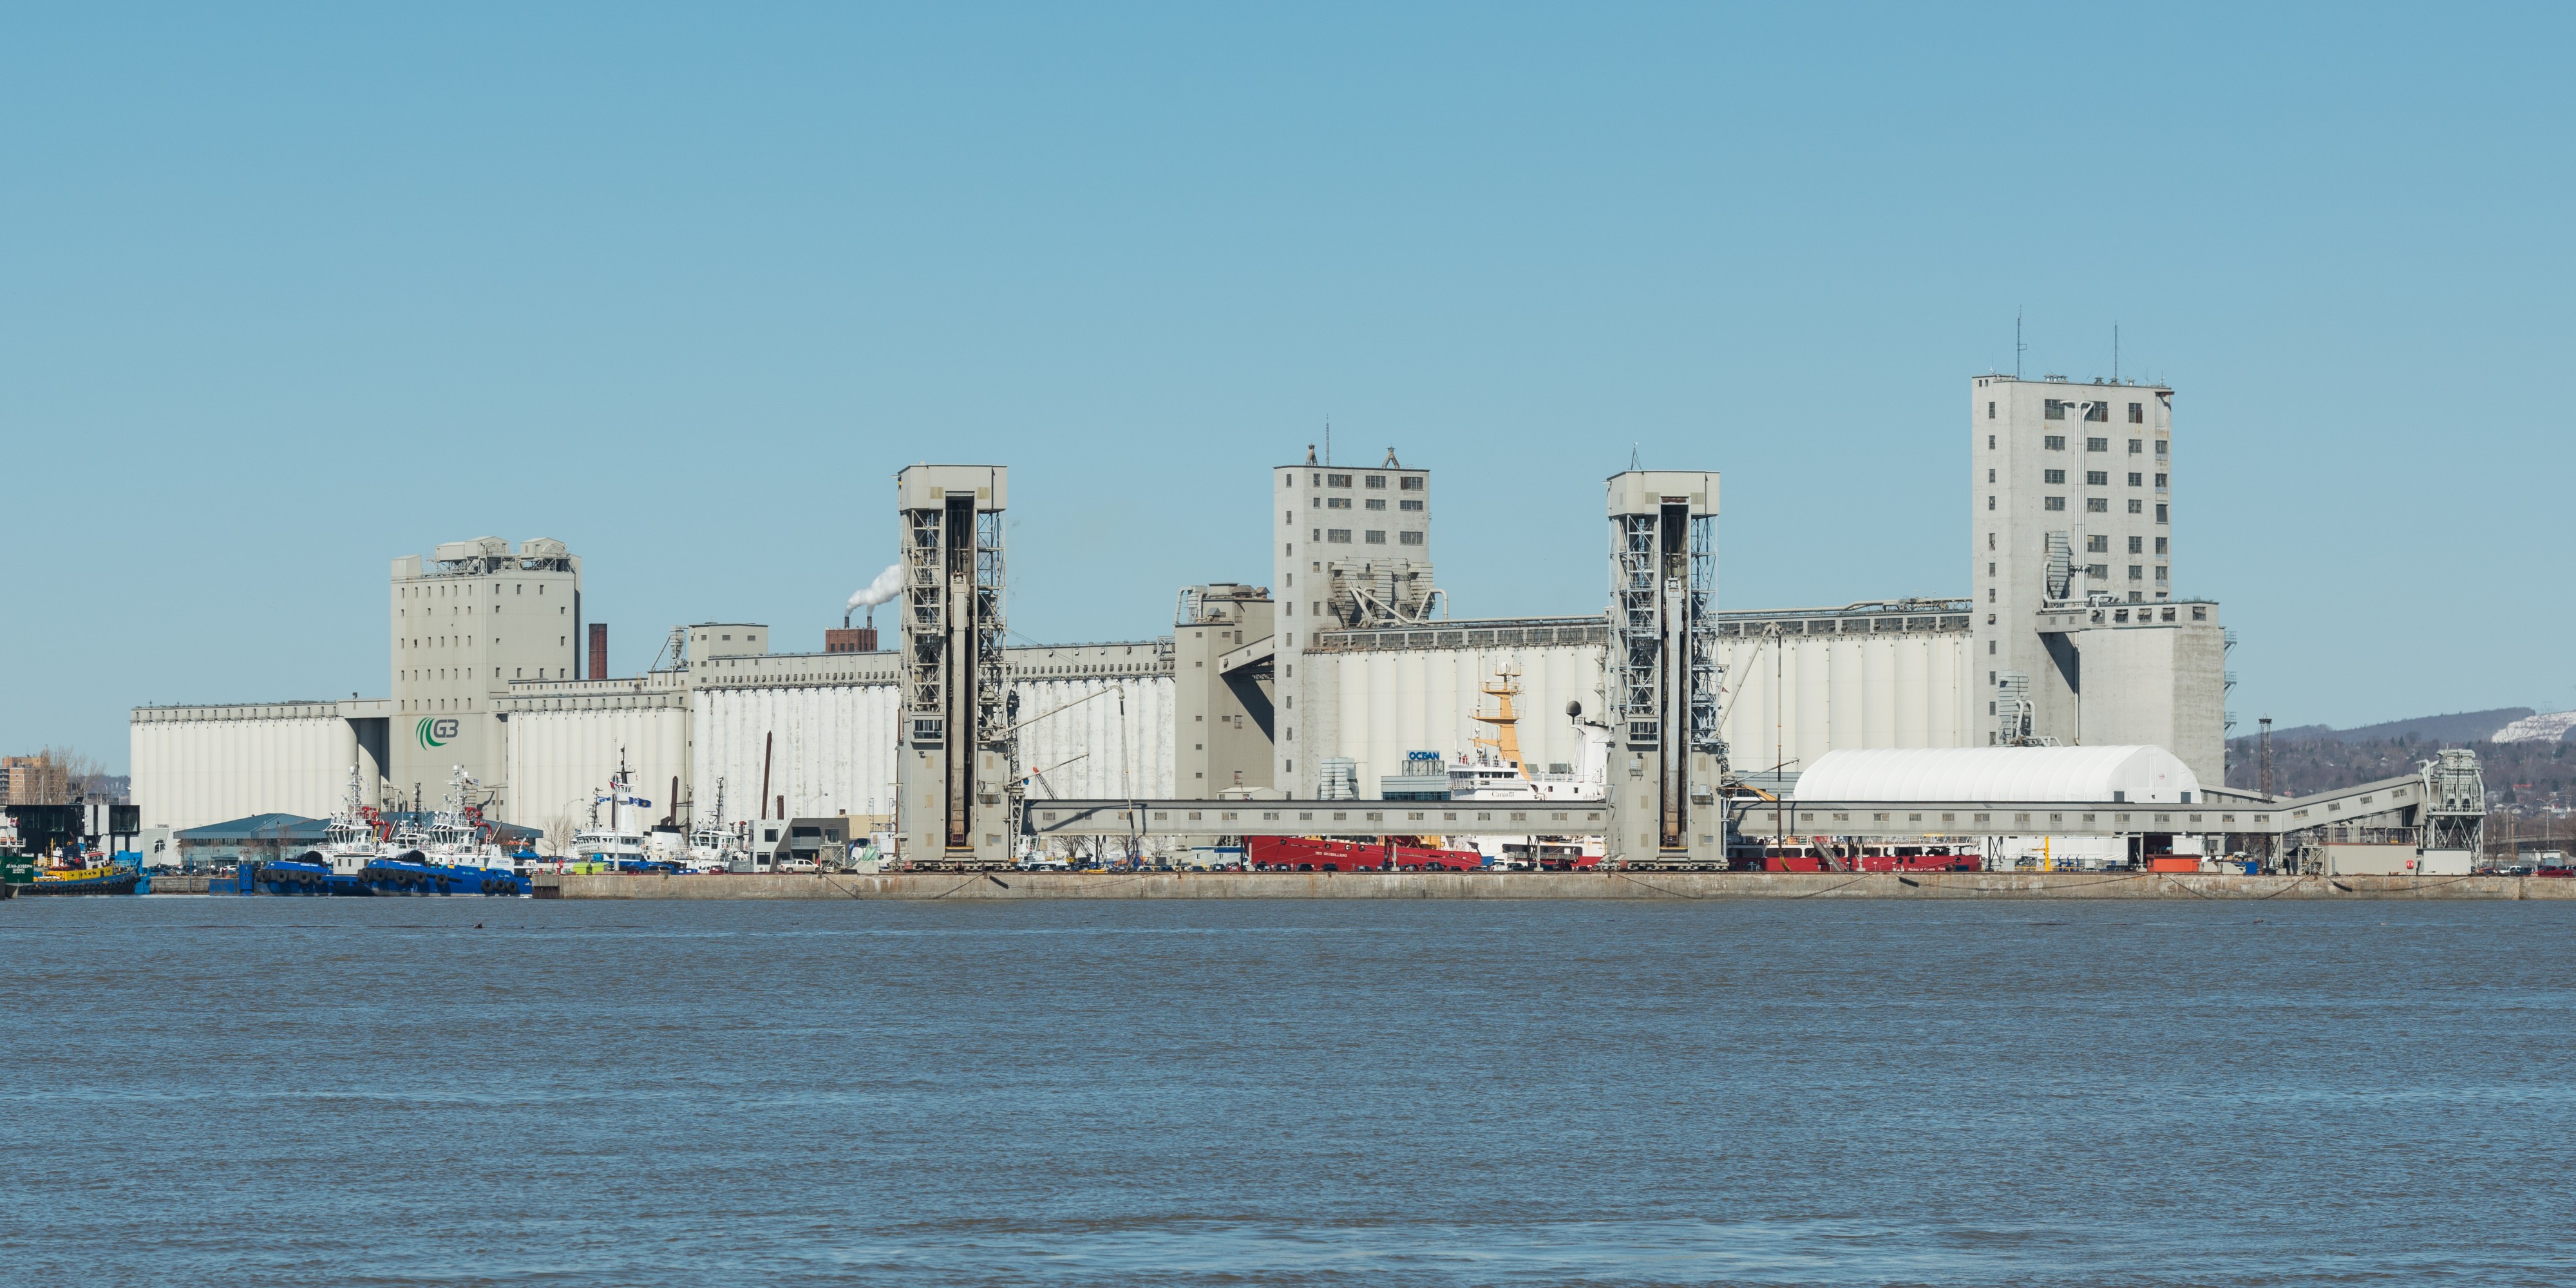 Port of Québec and G3 Port Terminal, Southeast view 20170414 1